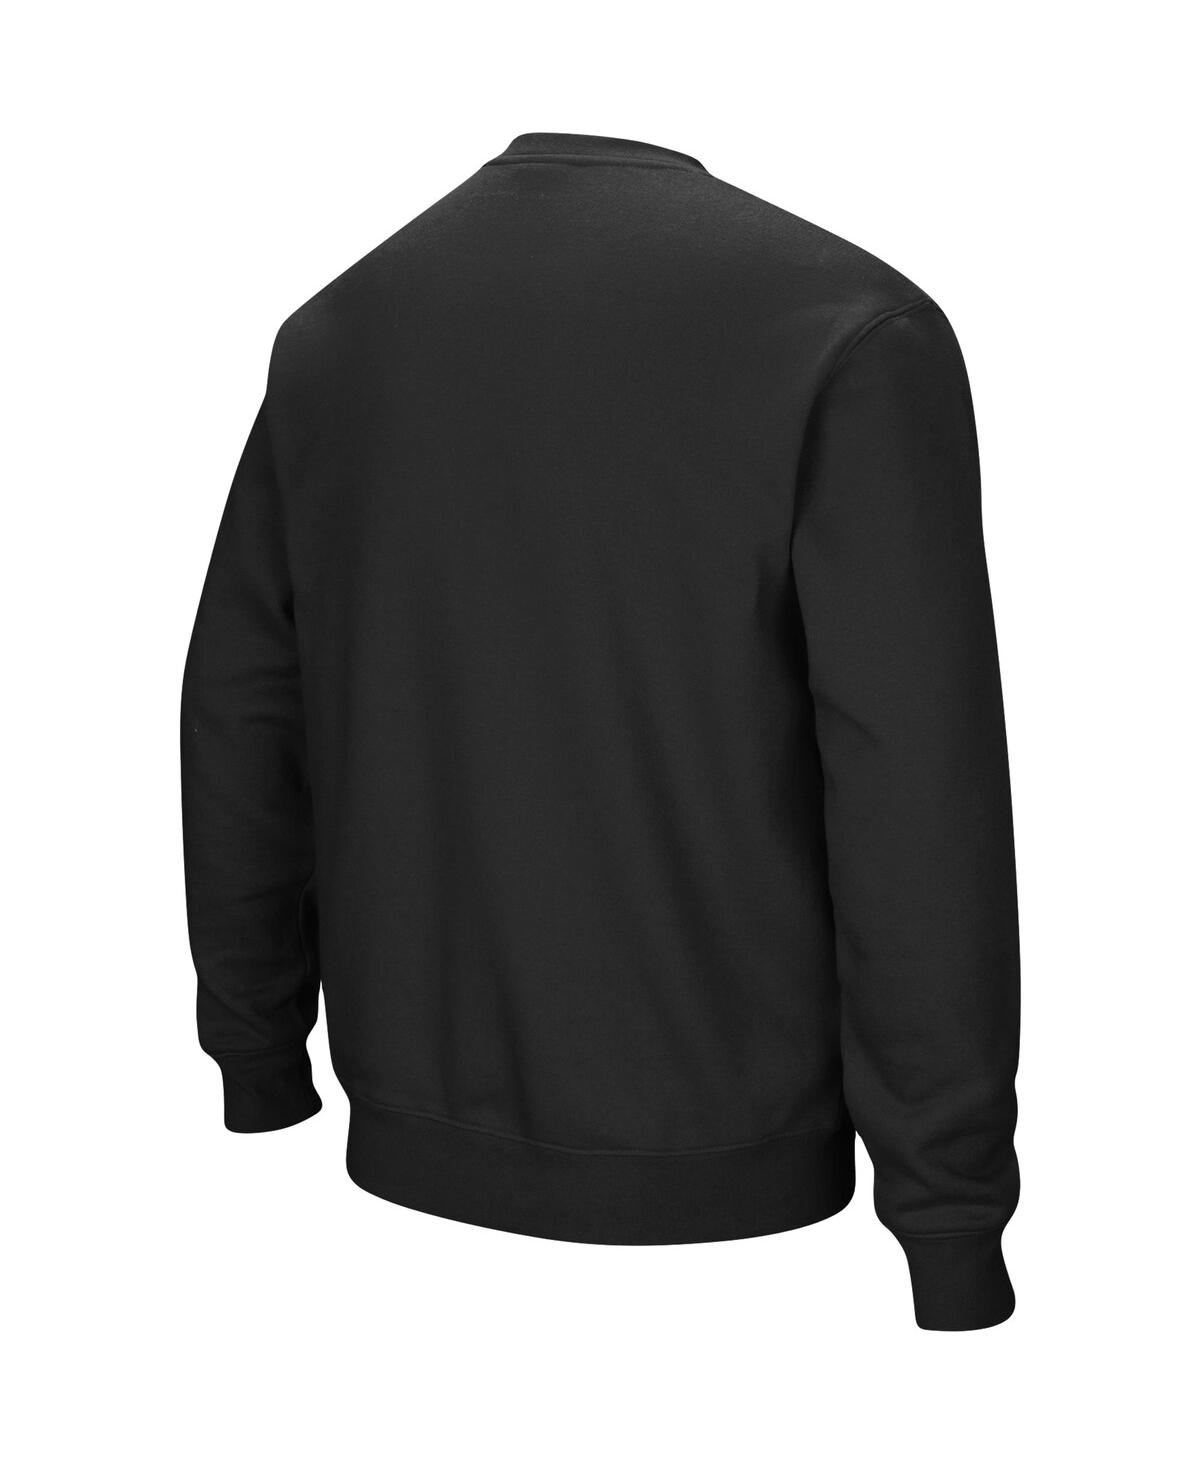 Shop Colosseum Men's  Black Mississippi State Bulldogs Arch & Logo Tackle Twill Pullover Sweatshirt